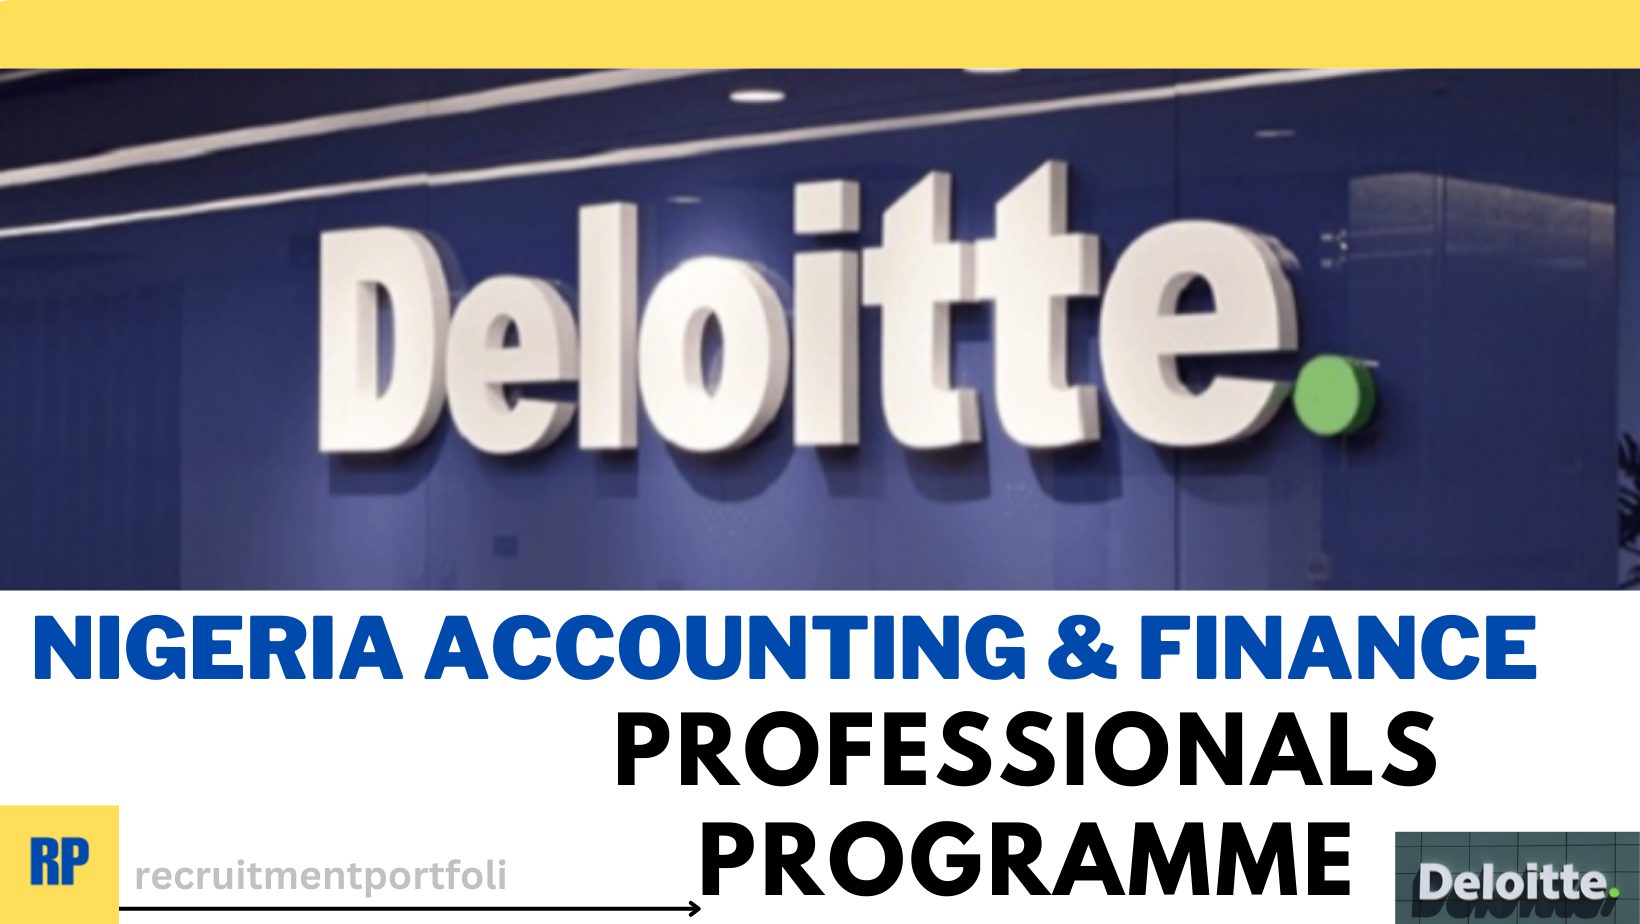 Deloitte Nigeria Accounting & Finance Professionals Program